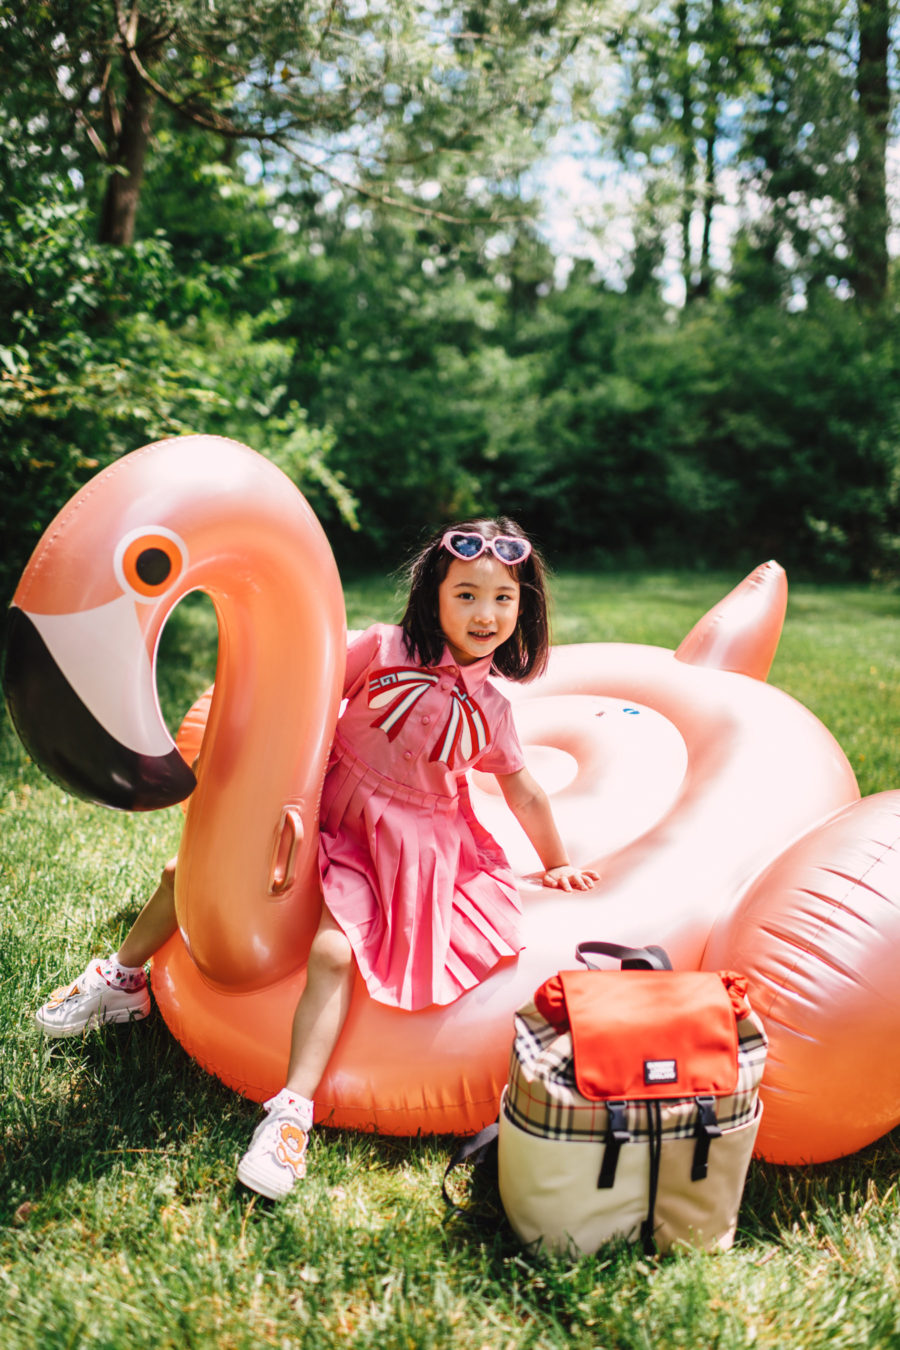 jessica wang's daughter wearing gucci dress on flamingo float // Jessica Wang - Notjessfashion.com